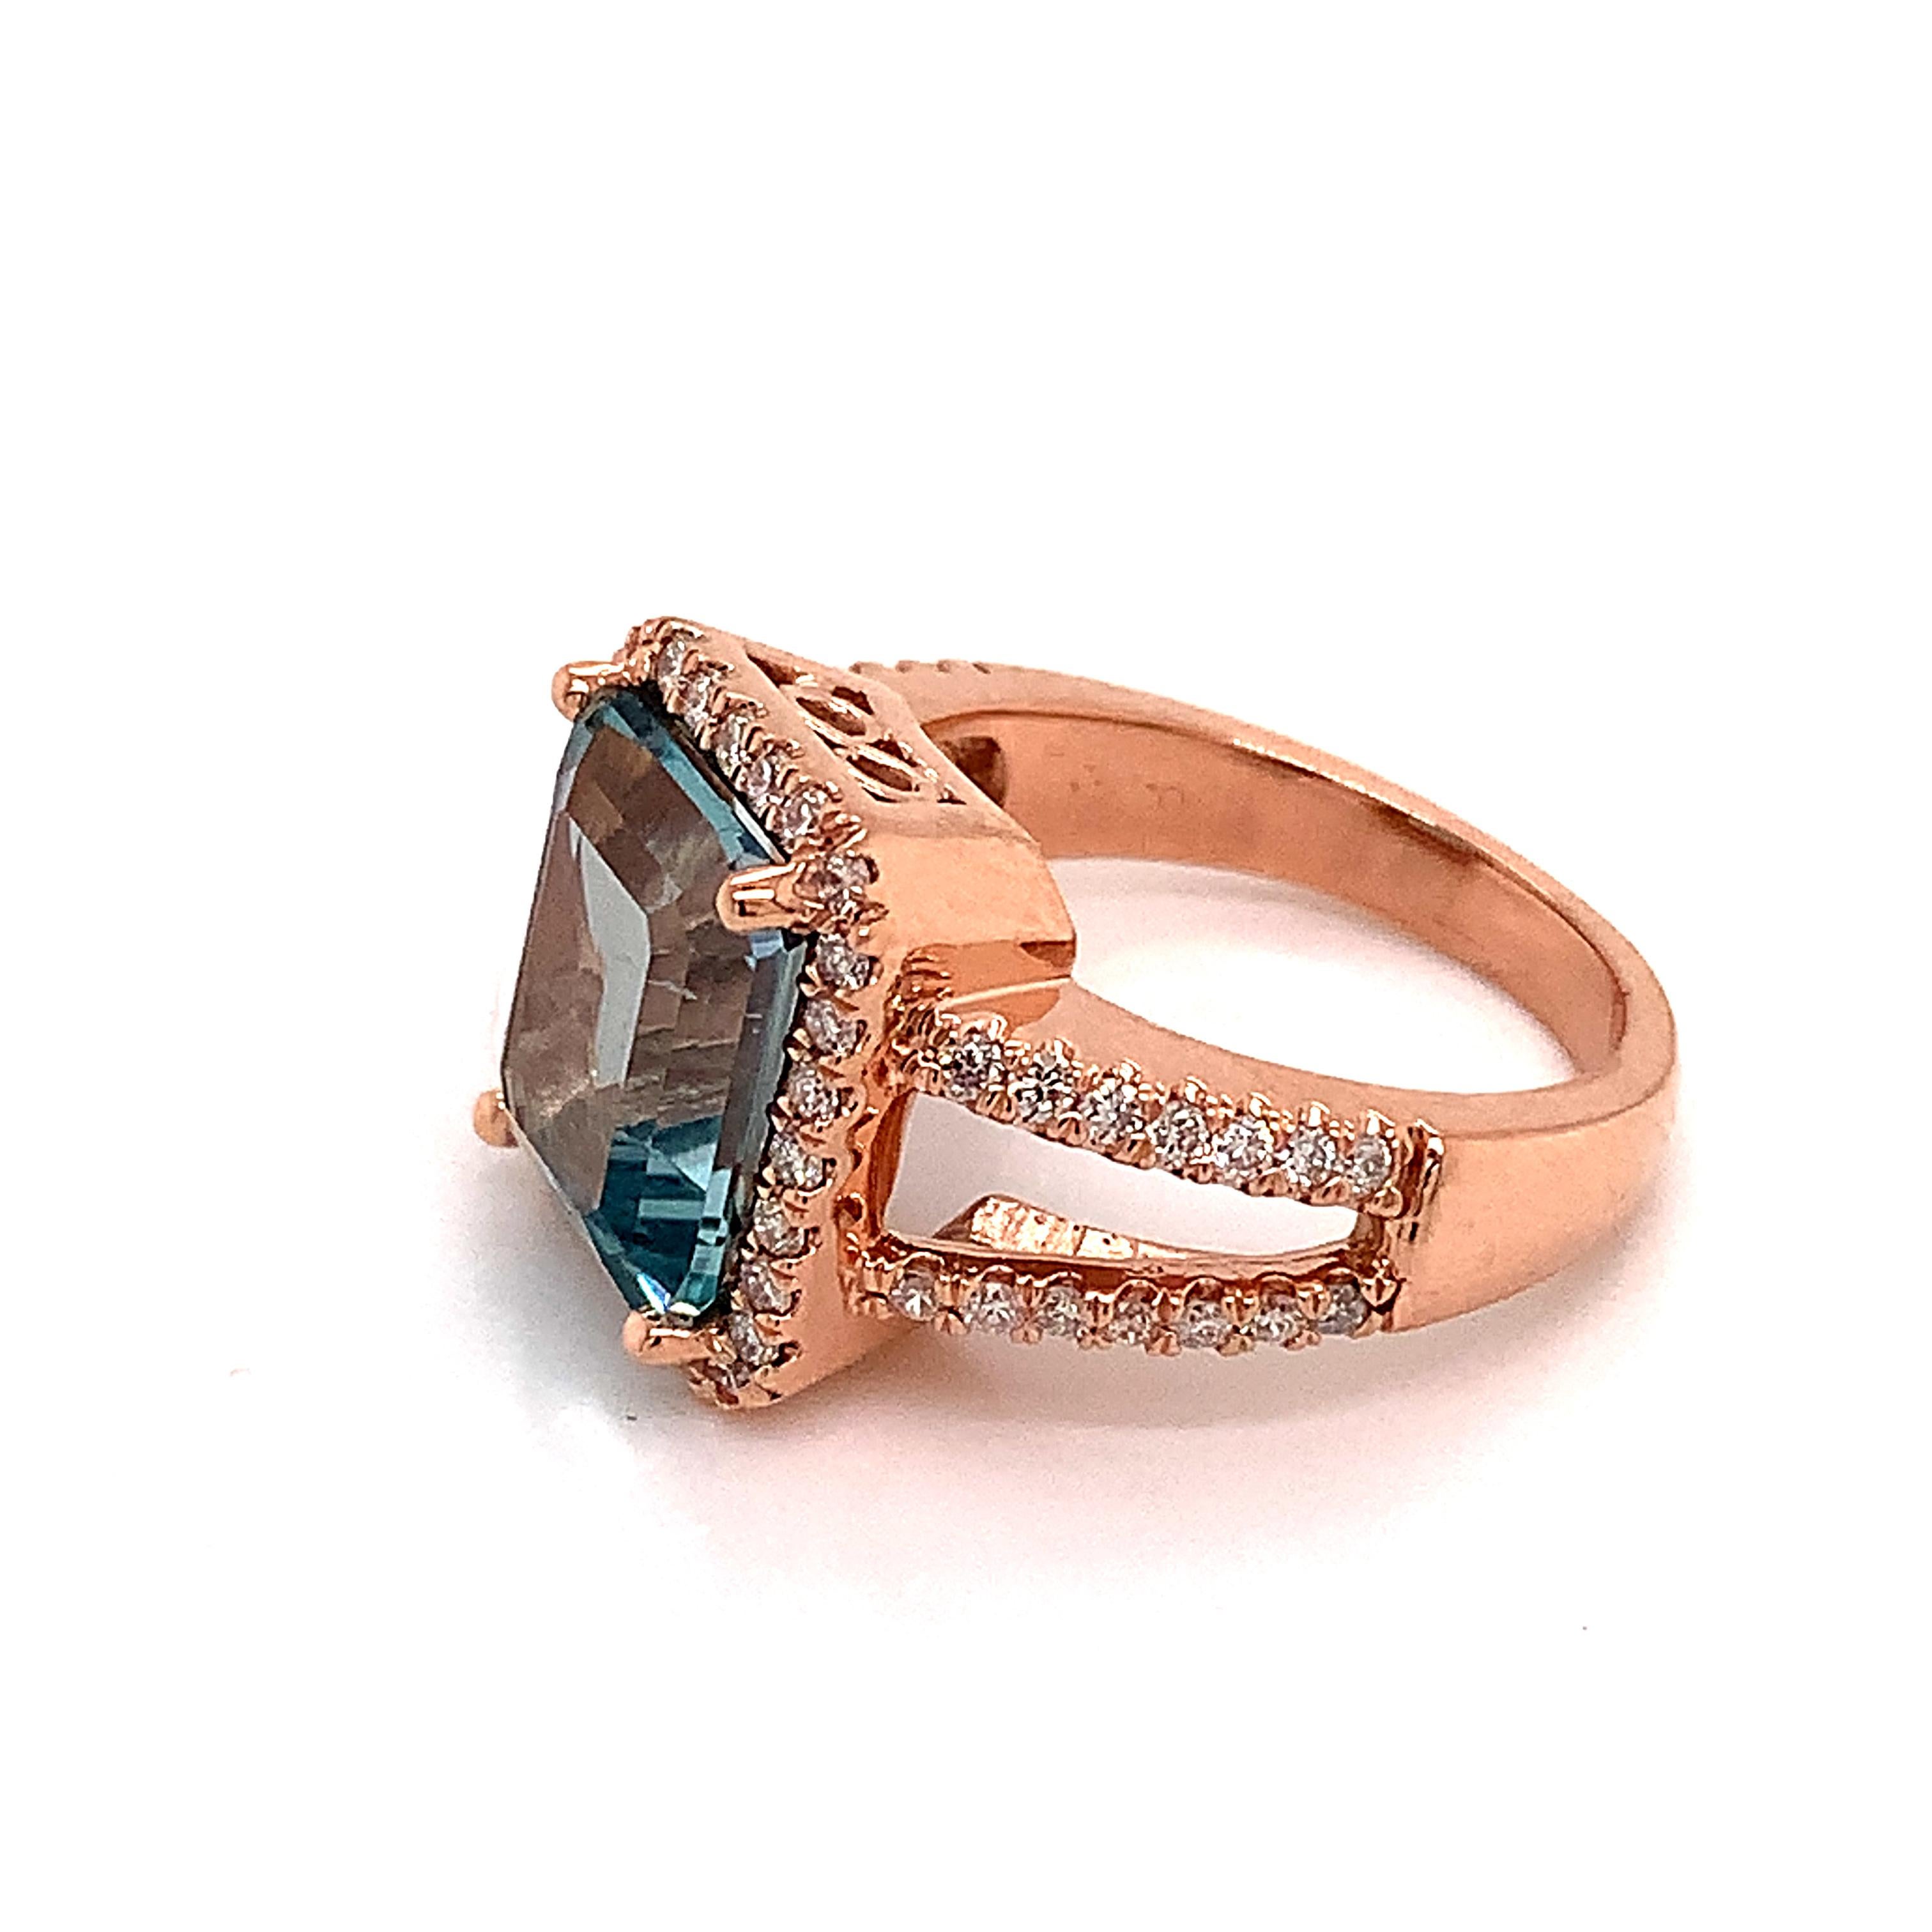 Diamond Aquamarine Ring 14k Gold 6.25 TCW Certified $6, 950 For Sale 3